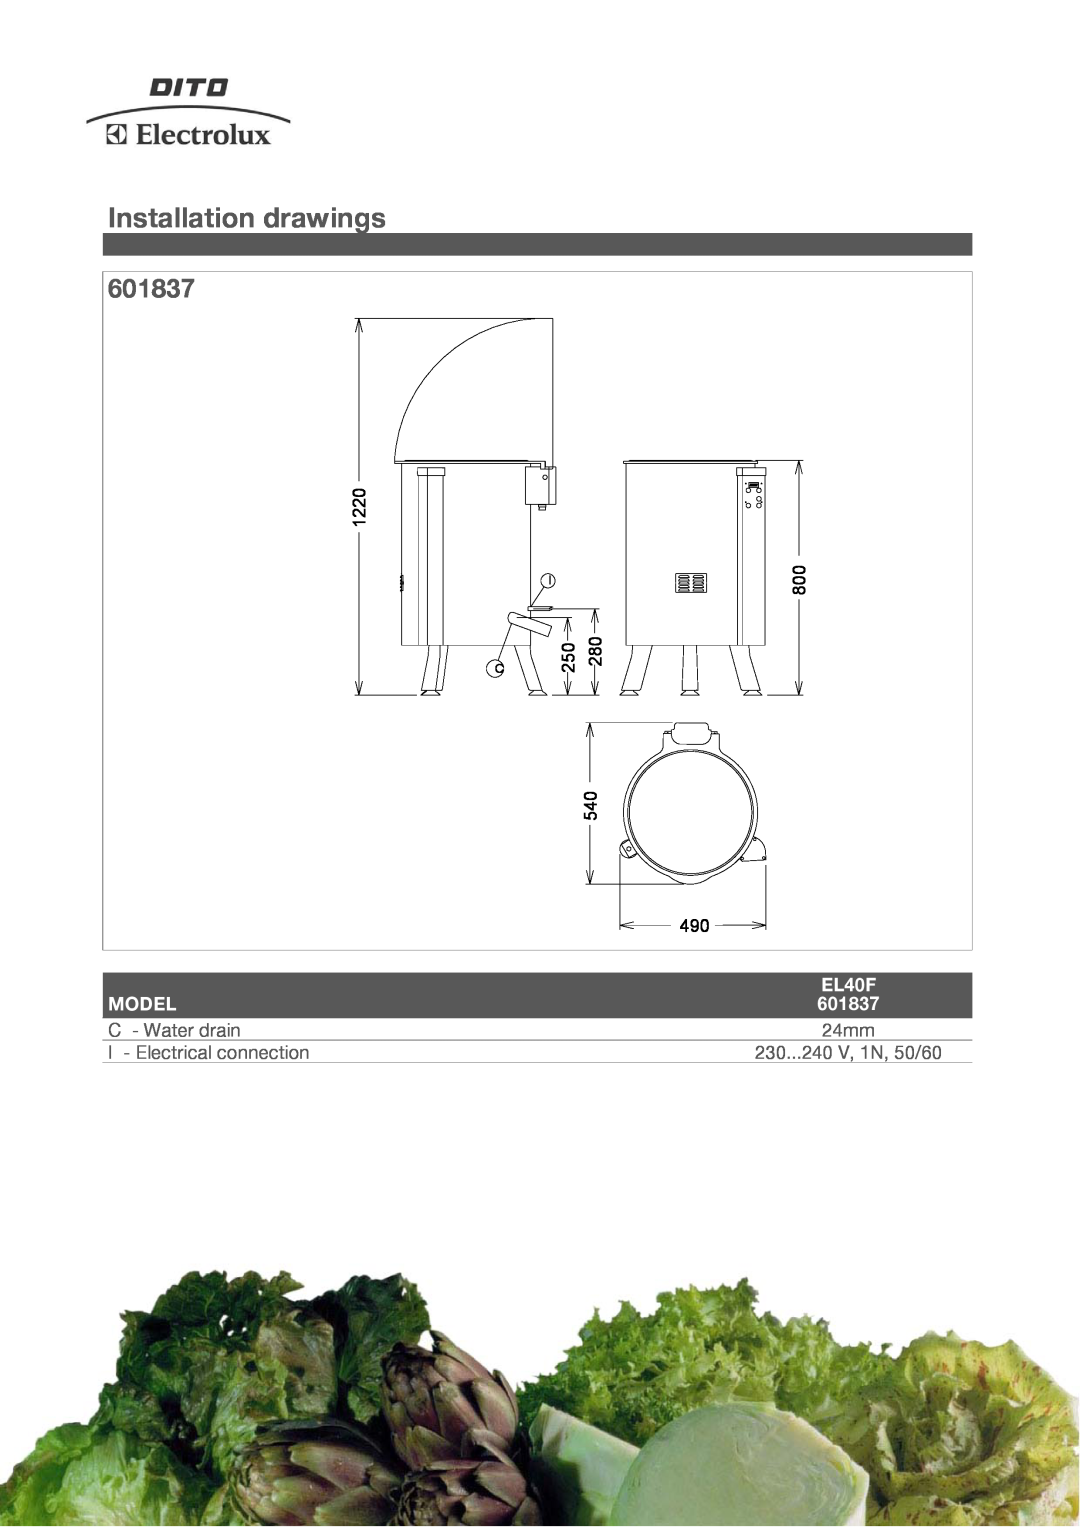 Electrolux 601837 manual Installation drawings, Model, 1220, EL40F, 24mm 